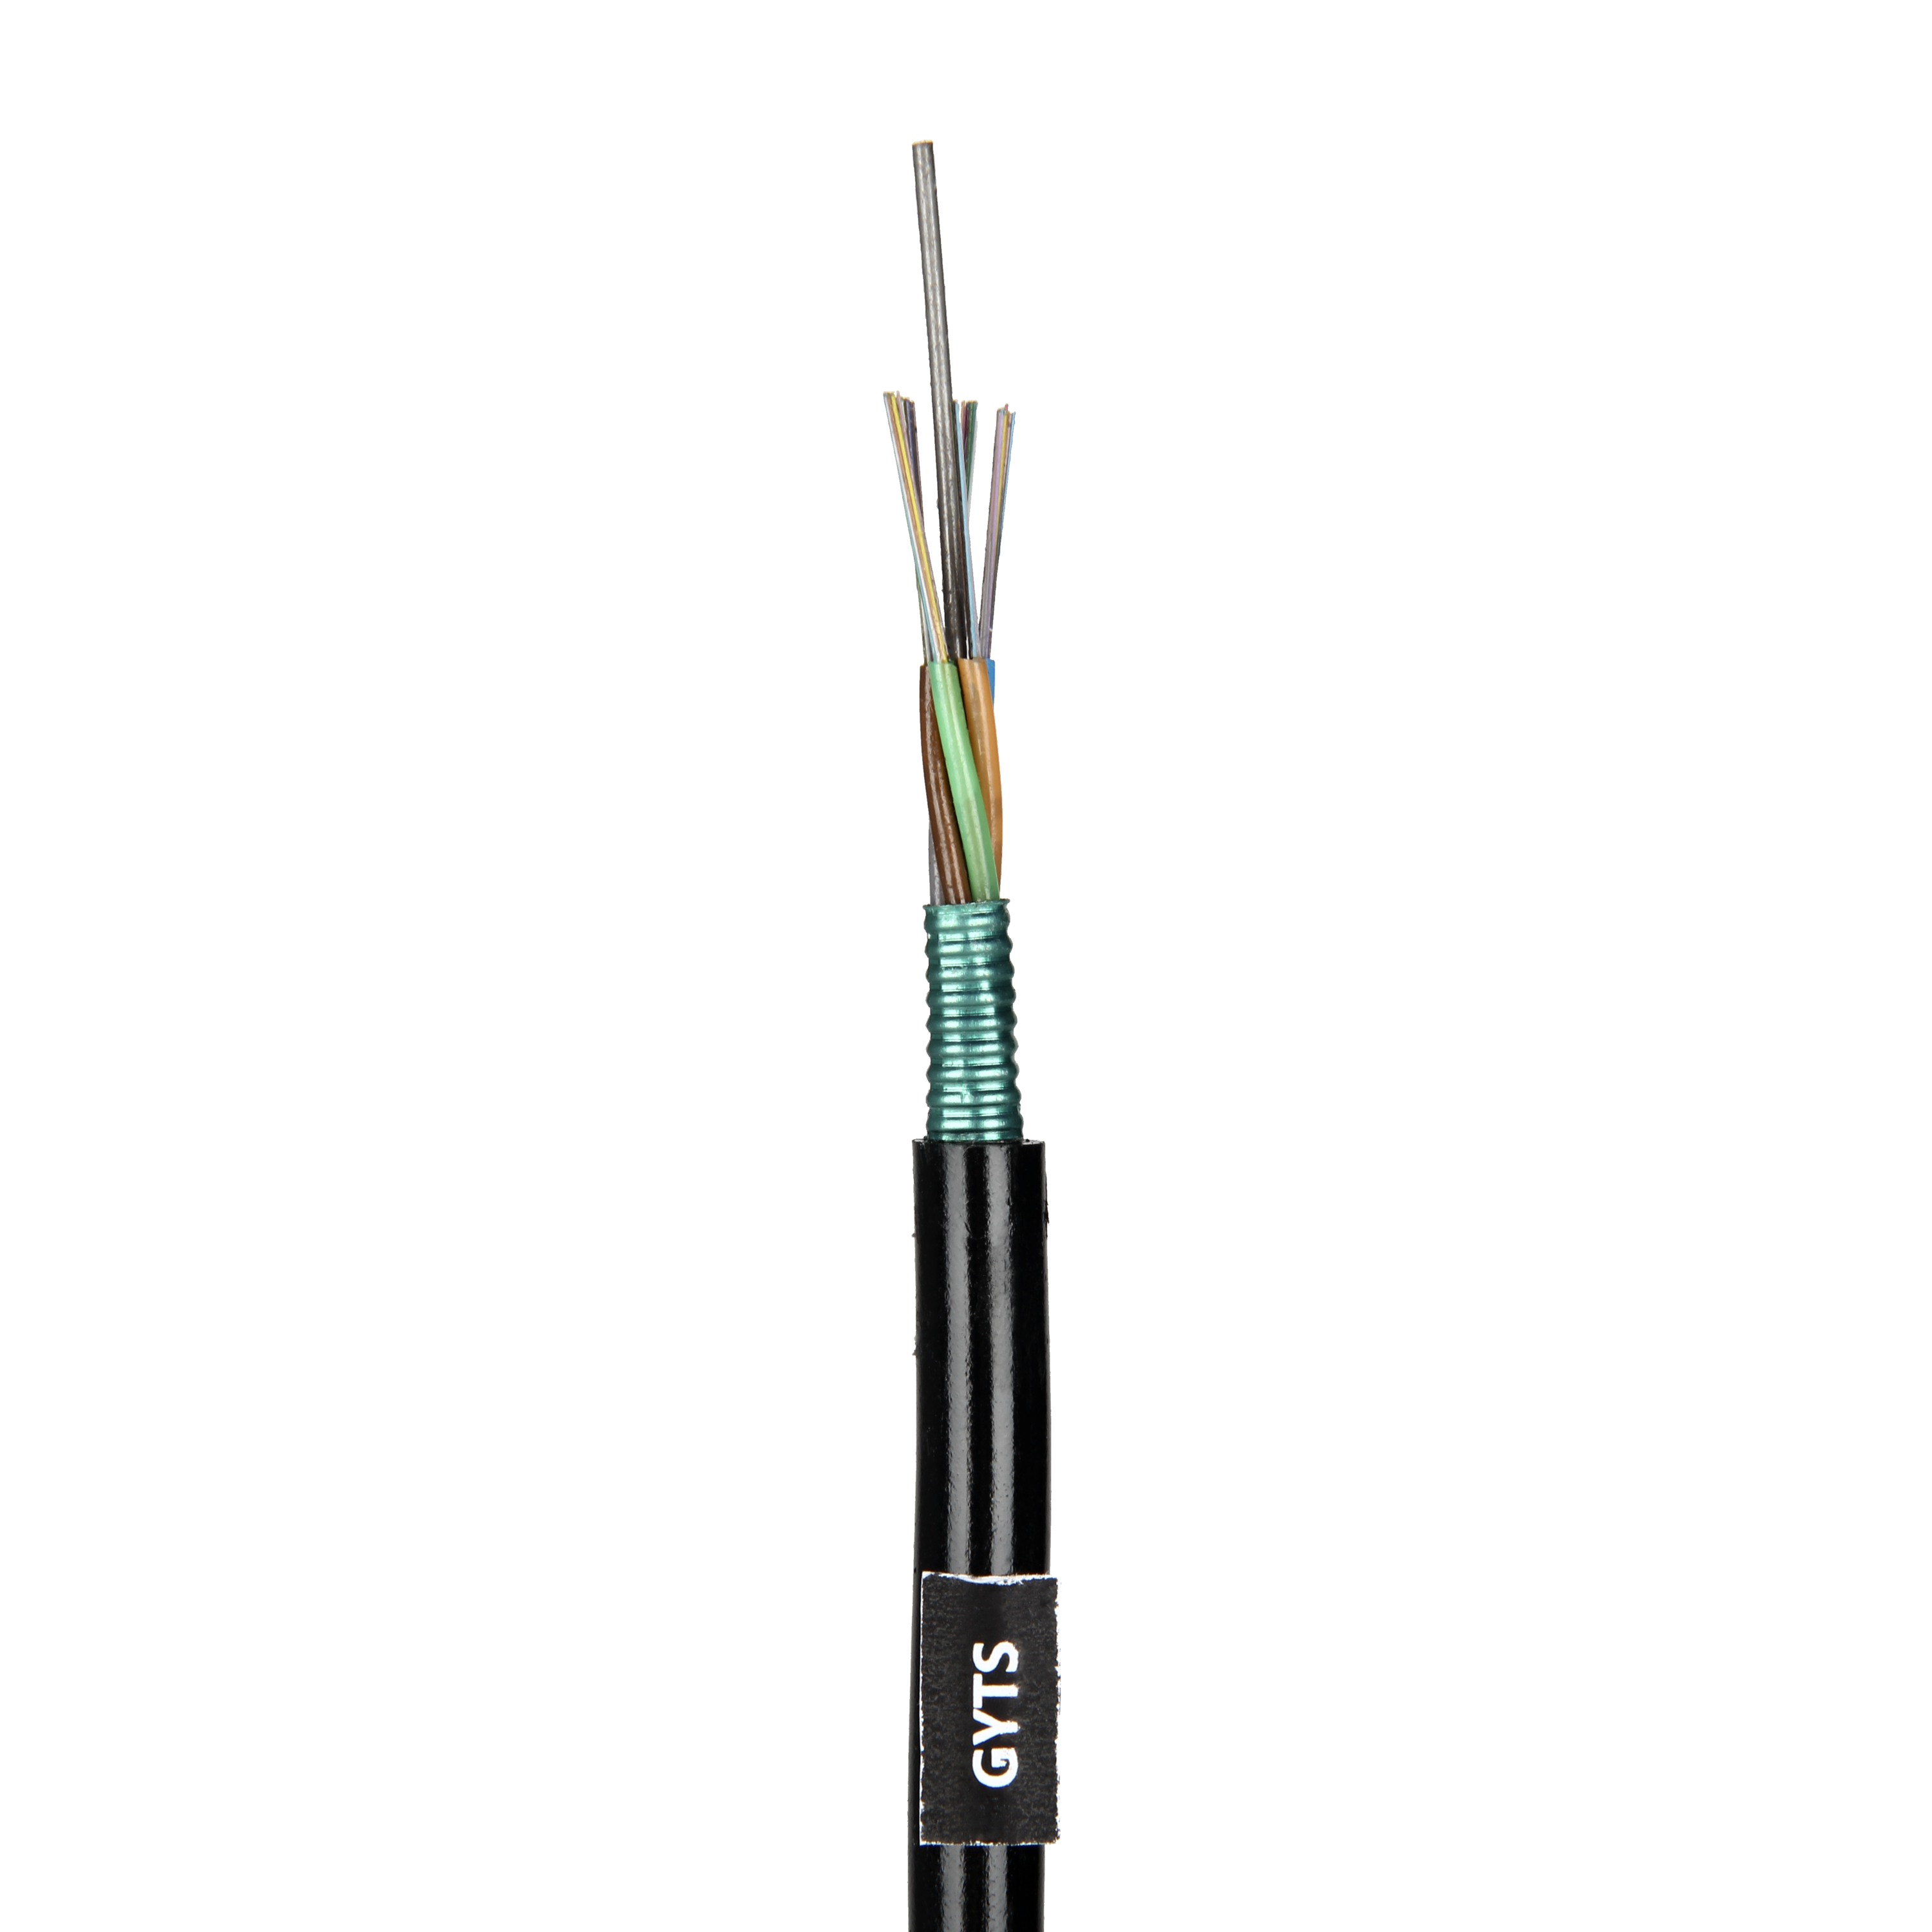 GYTS Duct Underground Aerial 48 Core Fiber Optic Cable Price Per Meter